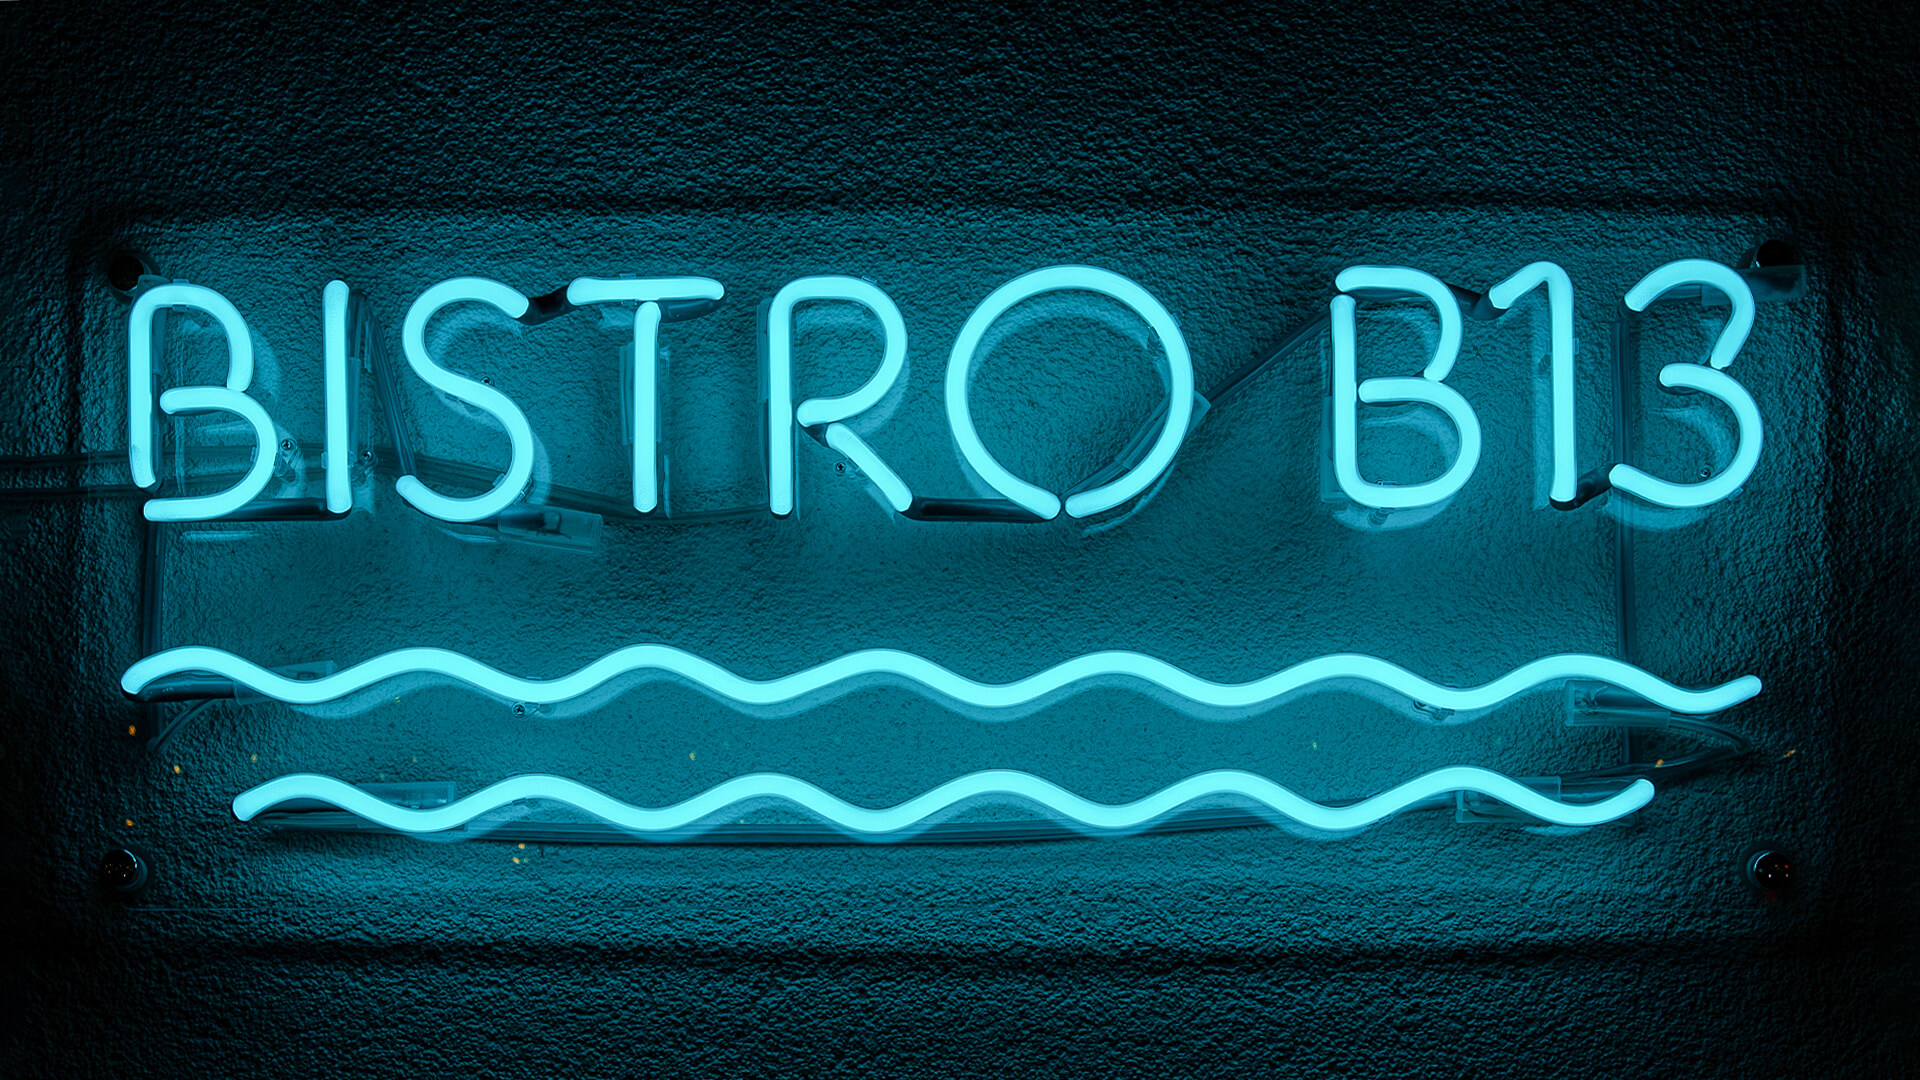 Bistro B13 - Verre néon Bistro turquoise.